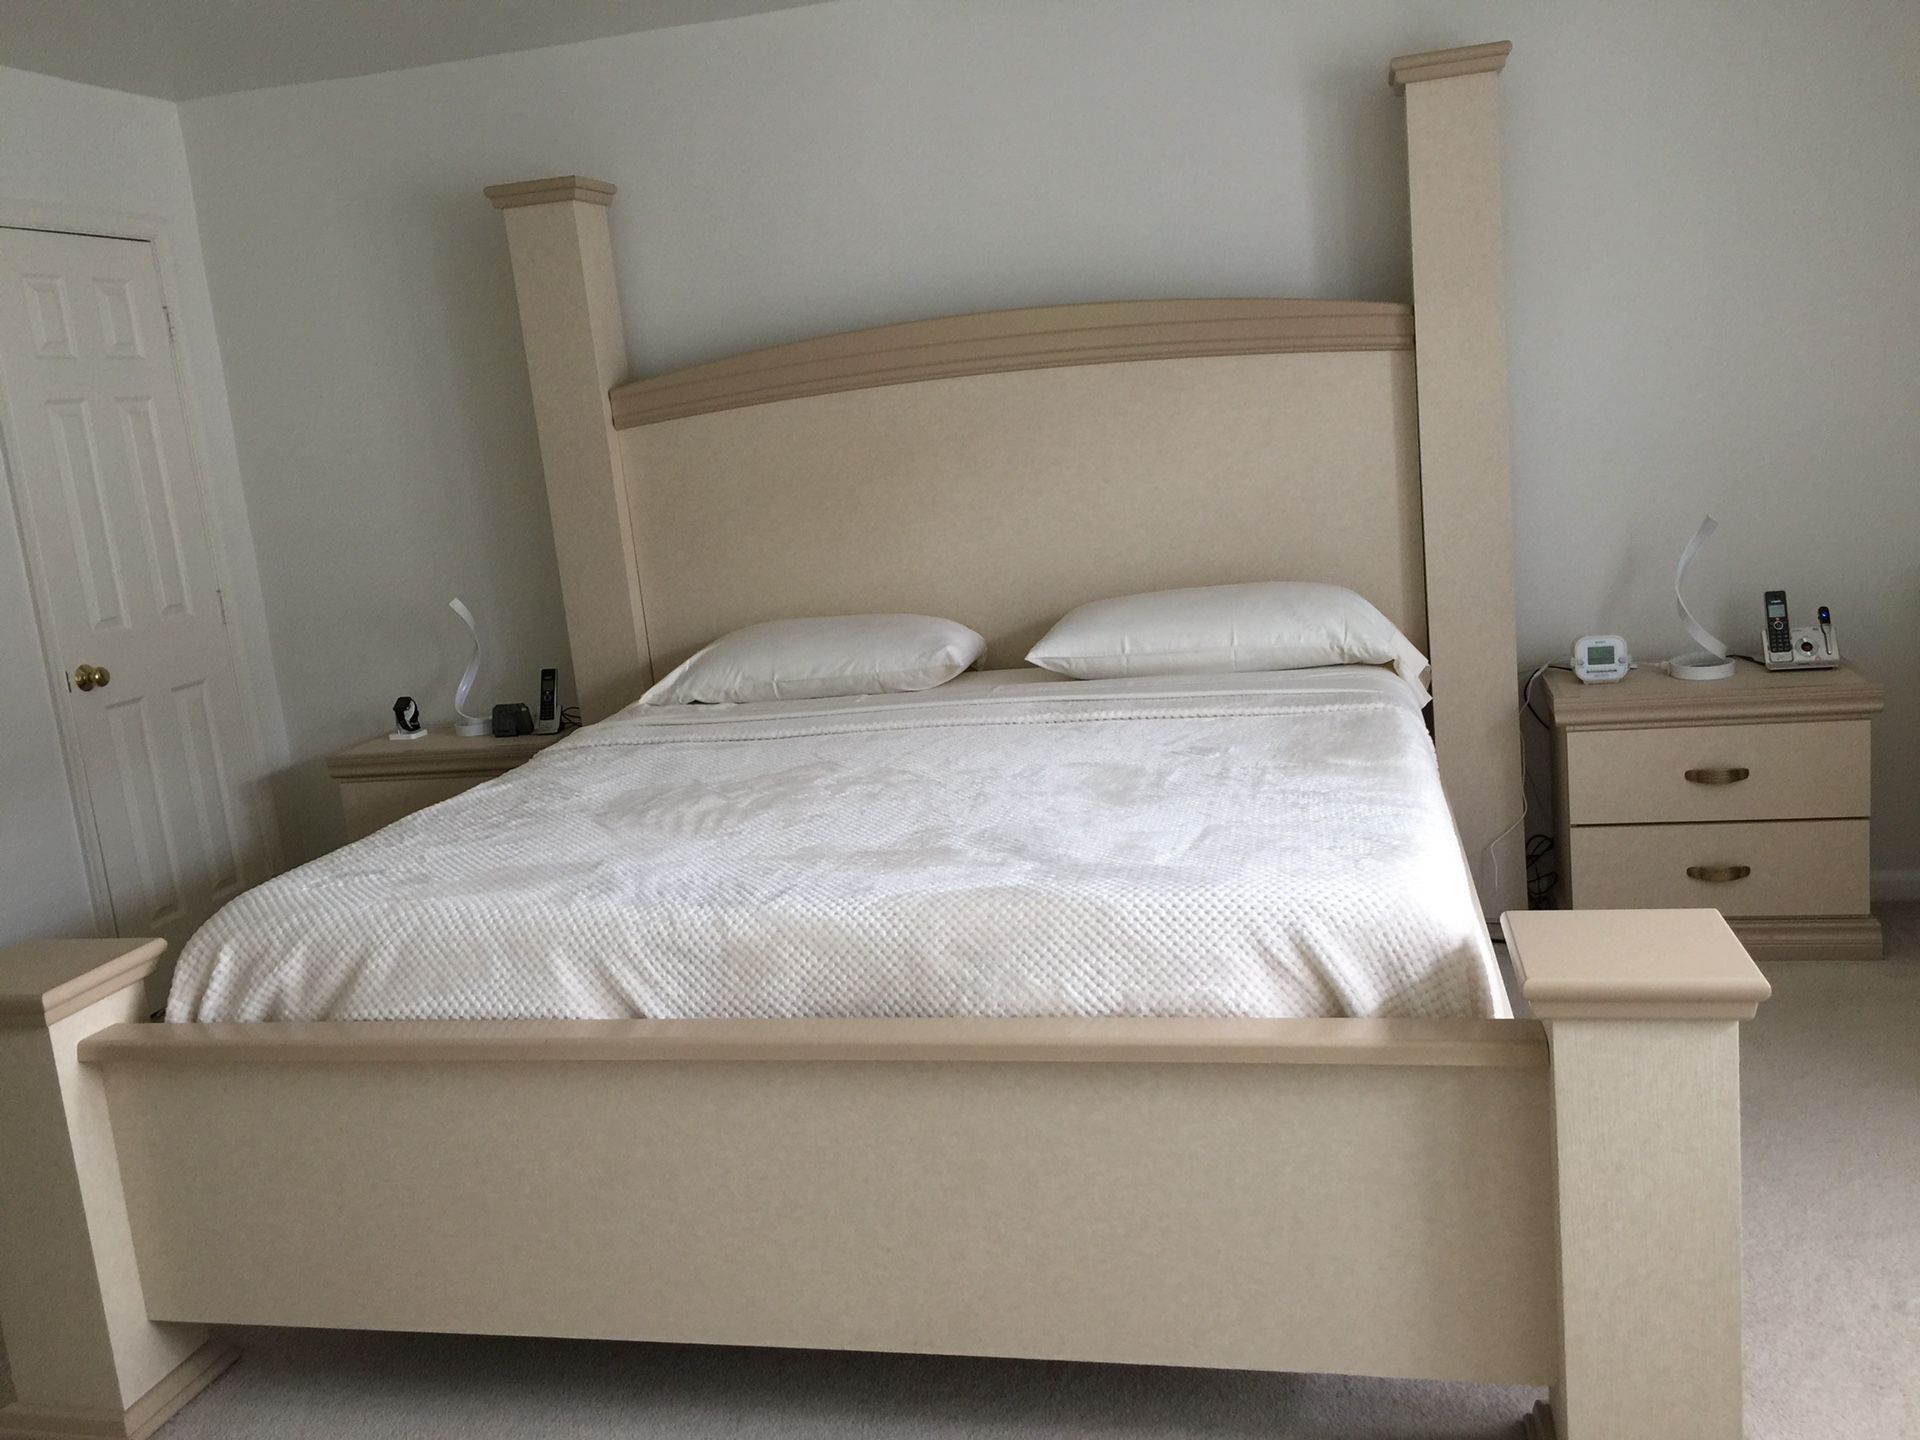 Bedroom set - Excellent condition